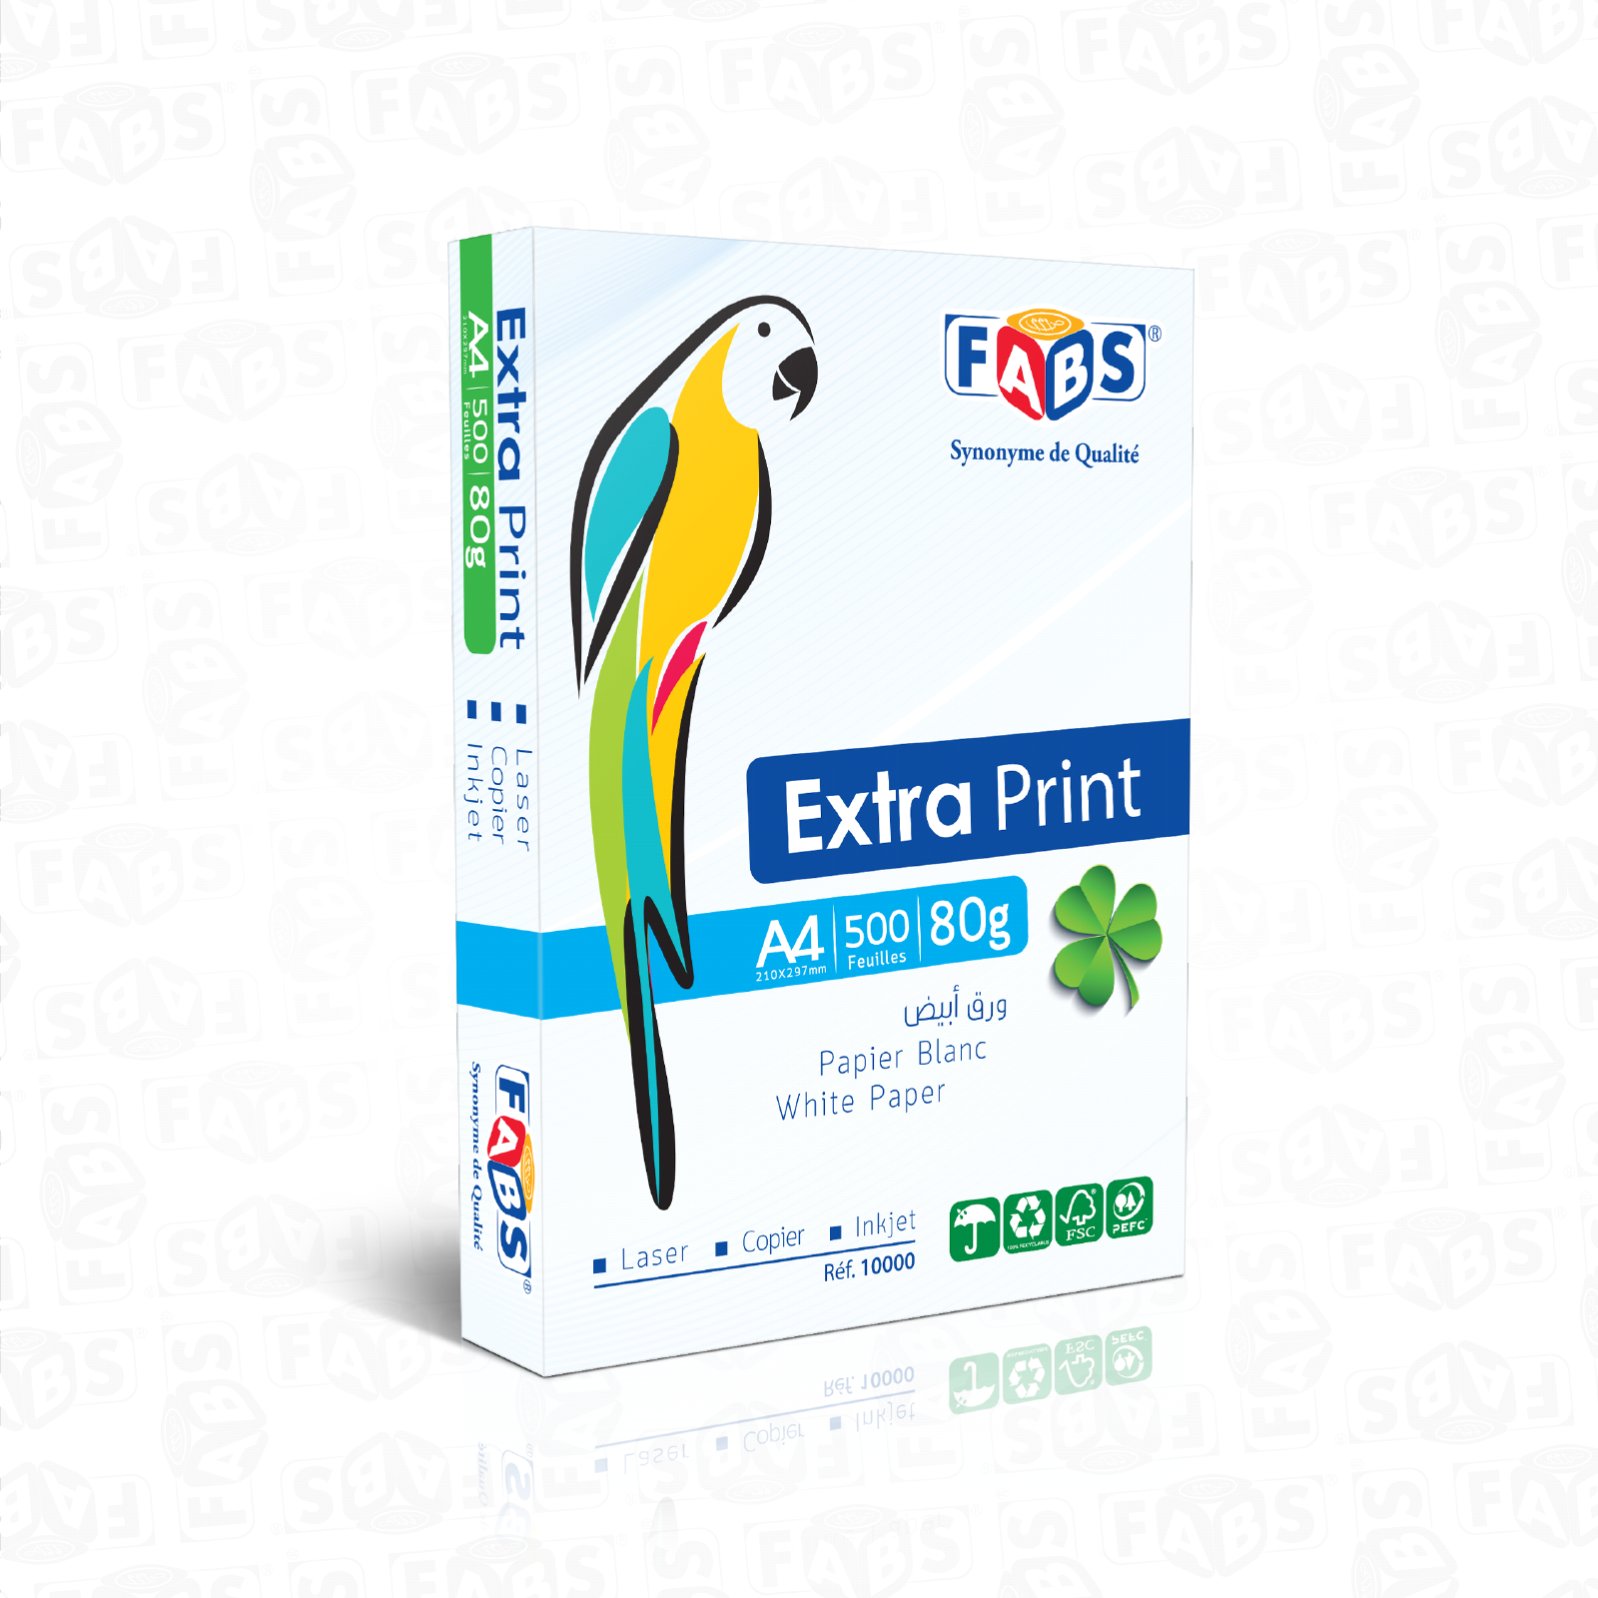 Papier A4 Blanc 80g  Extra Print - FABS-dz